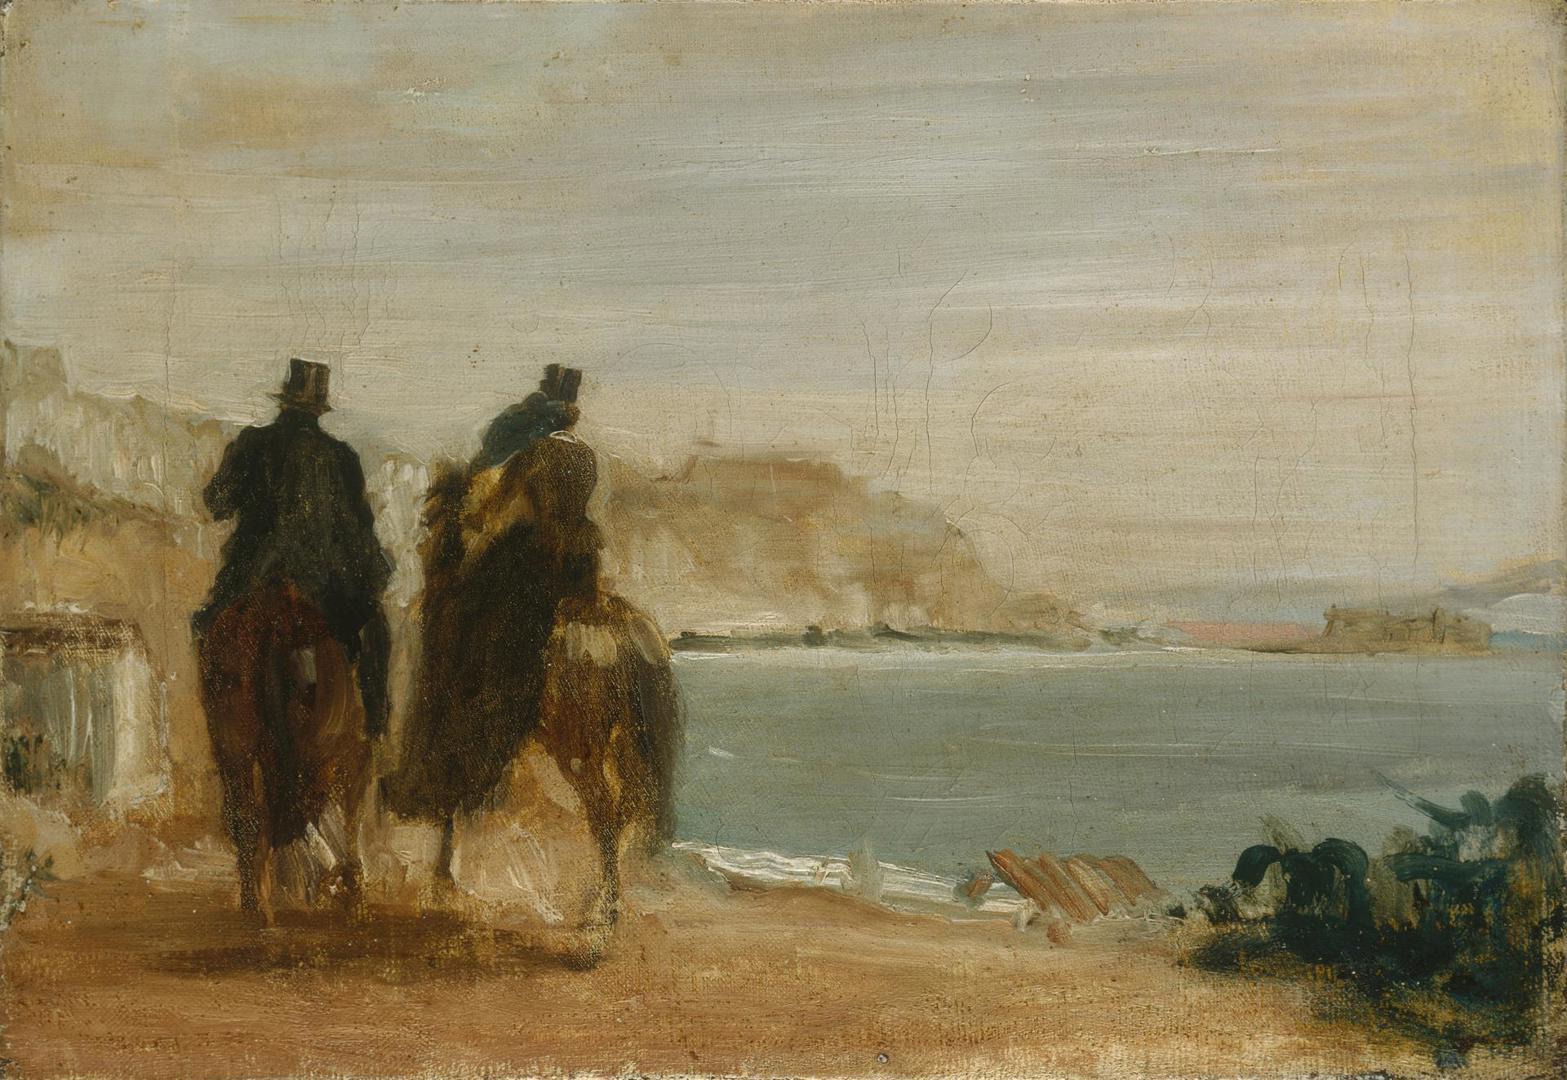 Promenade beside the Sea by Hilaire-Germain-Edgar Degas